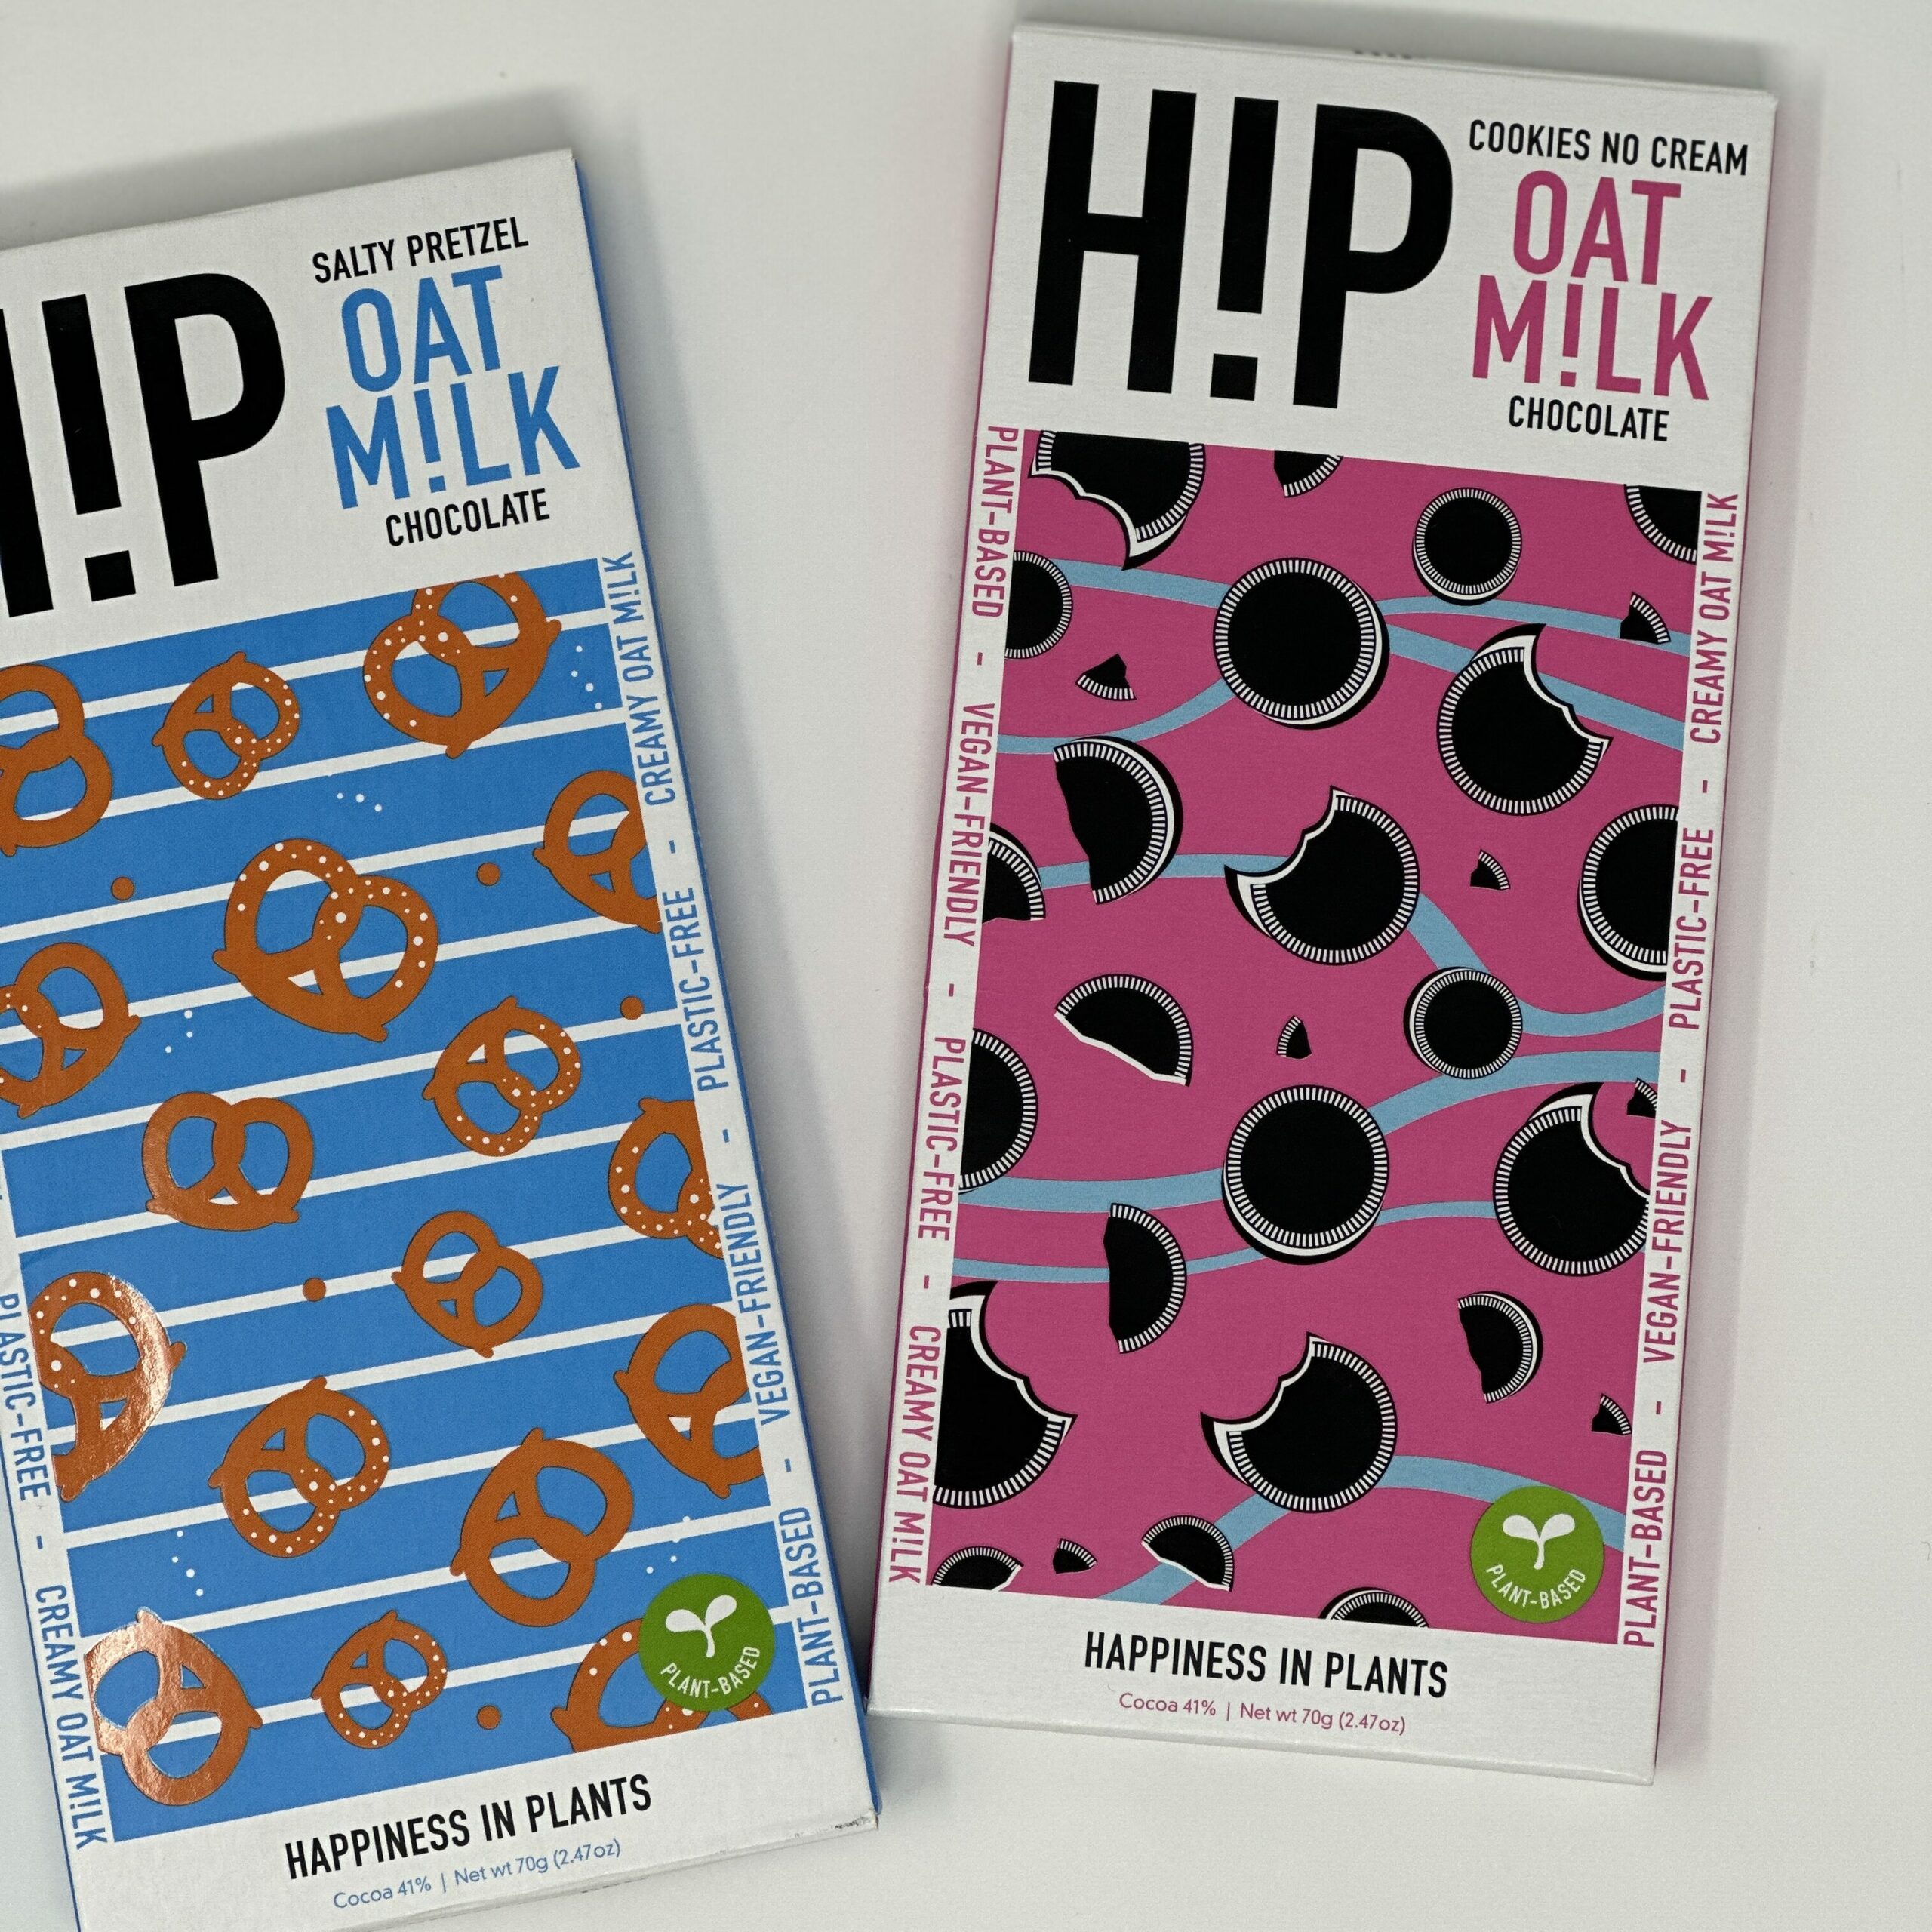 H!P oat milk chocolate bars